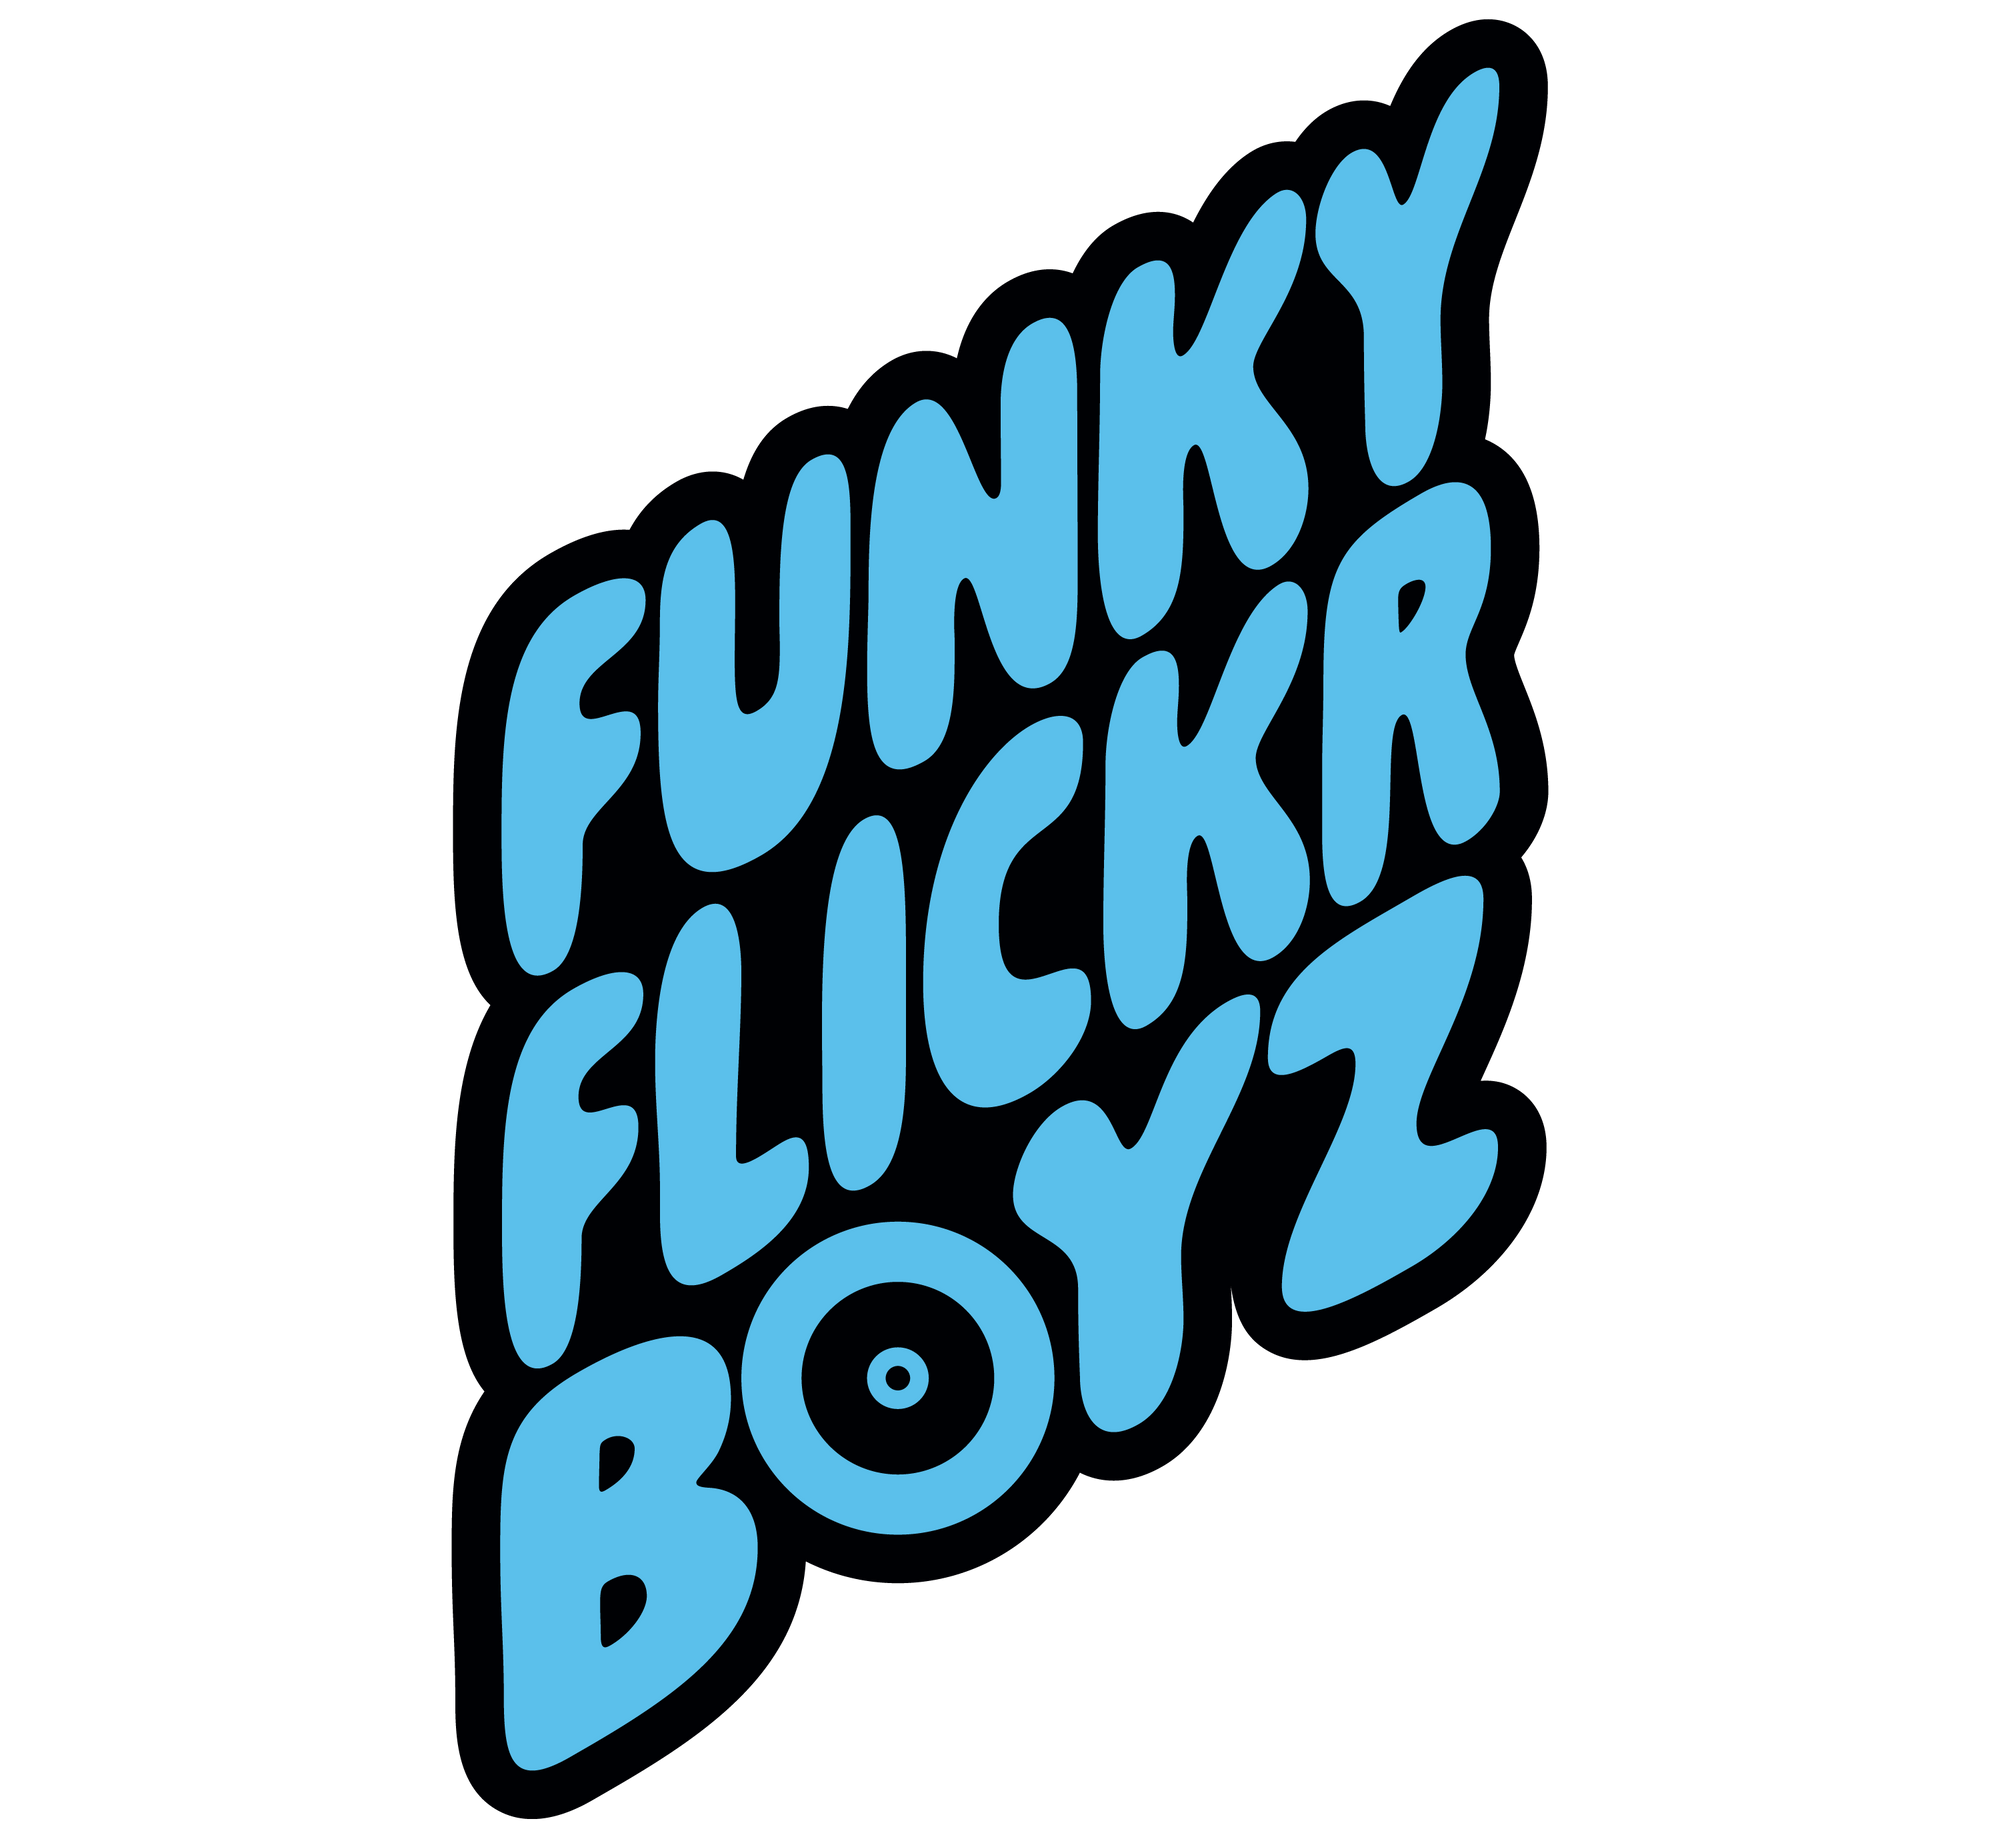 Funky Flickr Boyz Wrestling Gear - Rare Wrestling Shoes